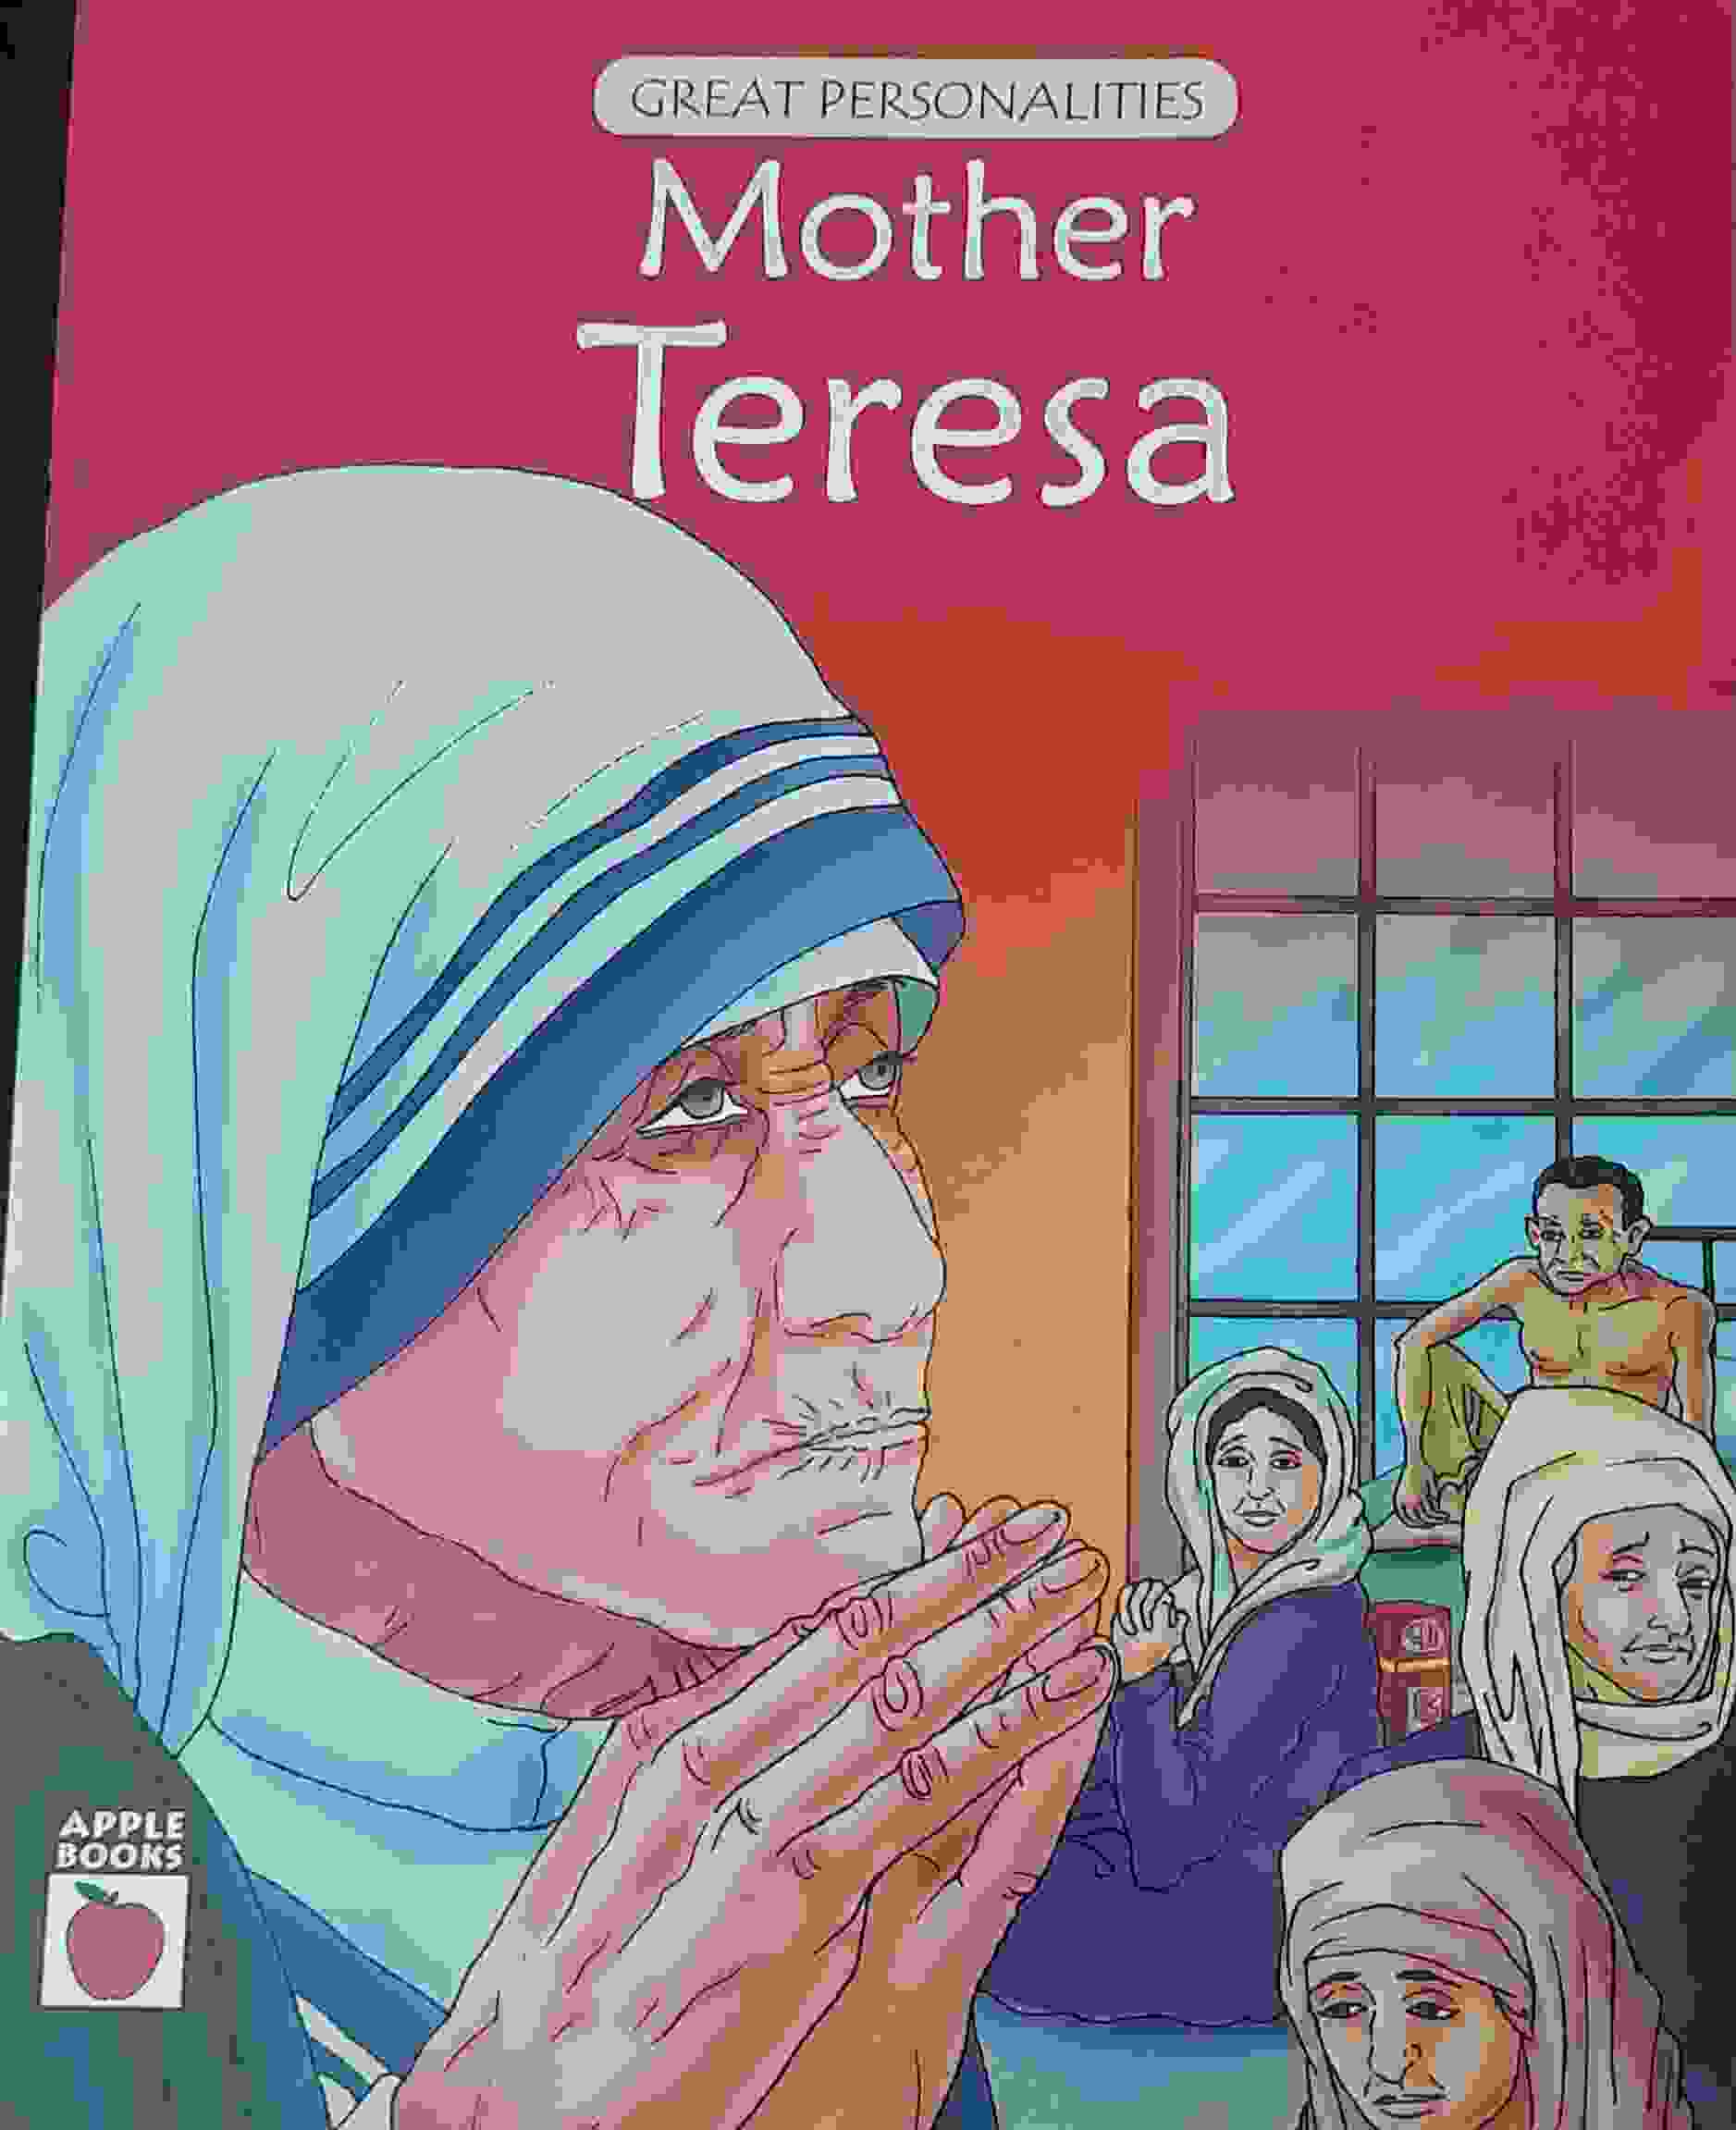 Great Personalities Mother Teresa [Paperback] Apple books